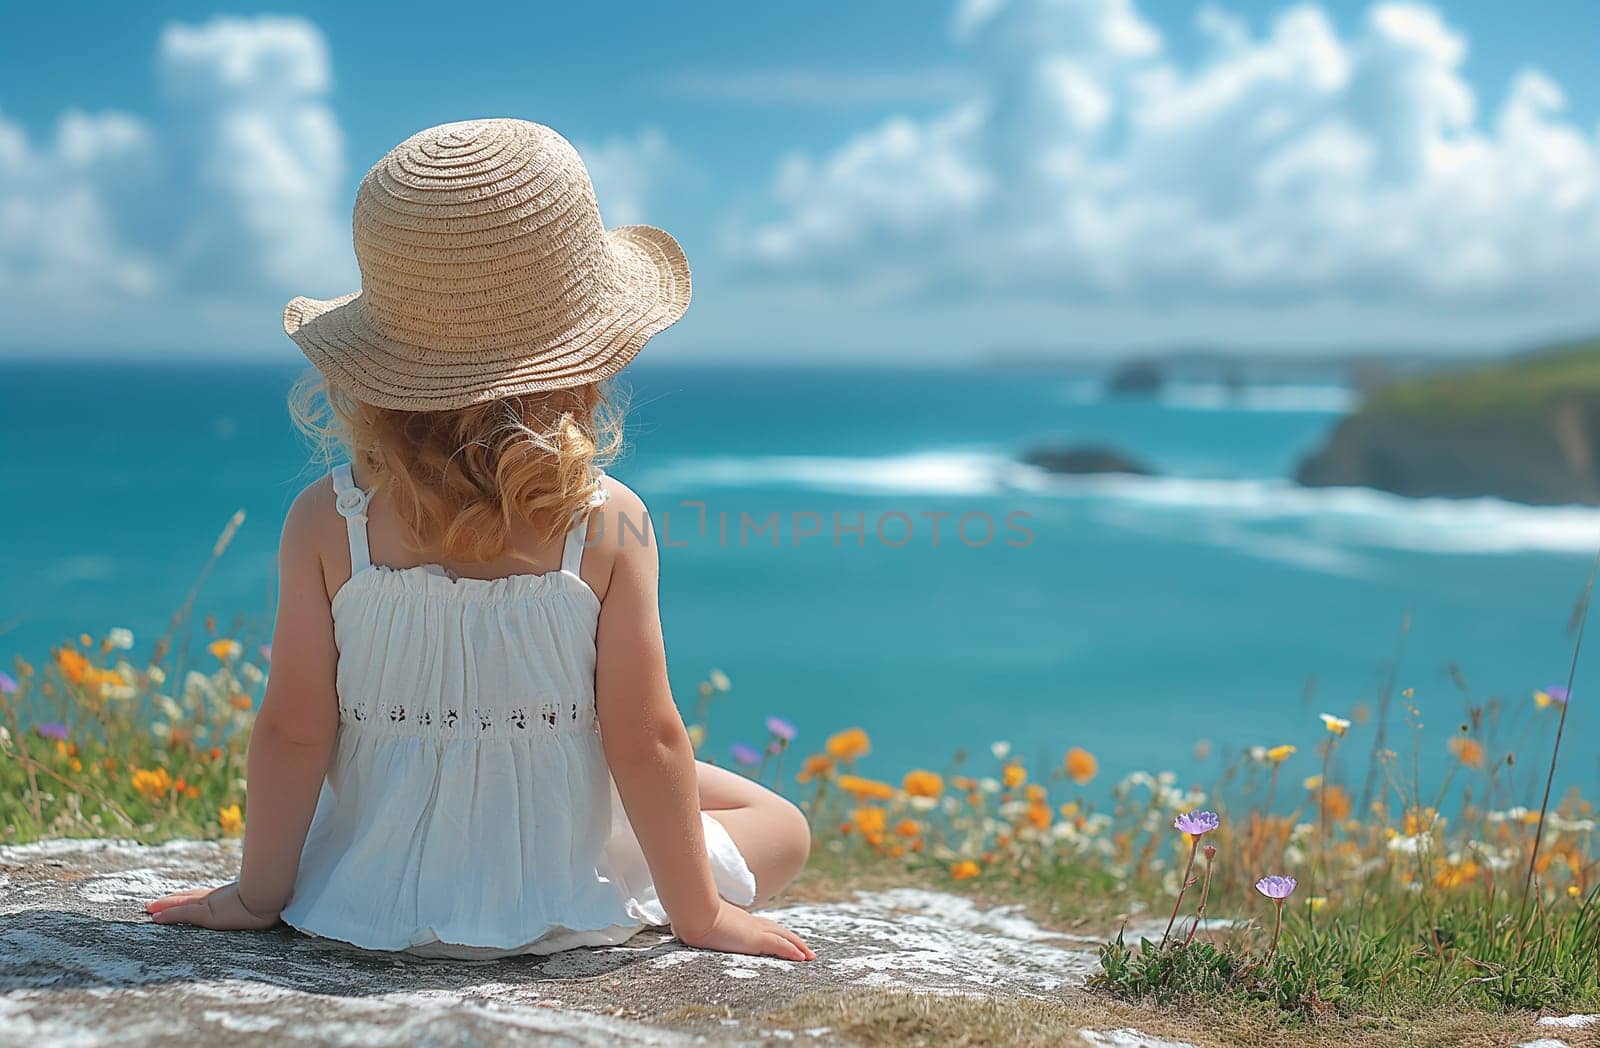 Child in sunhat enjoying a scenic coastal view